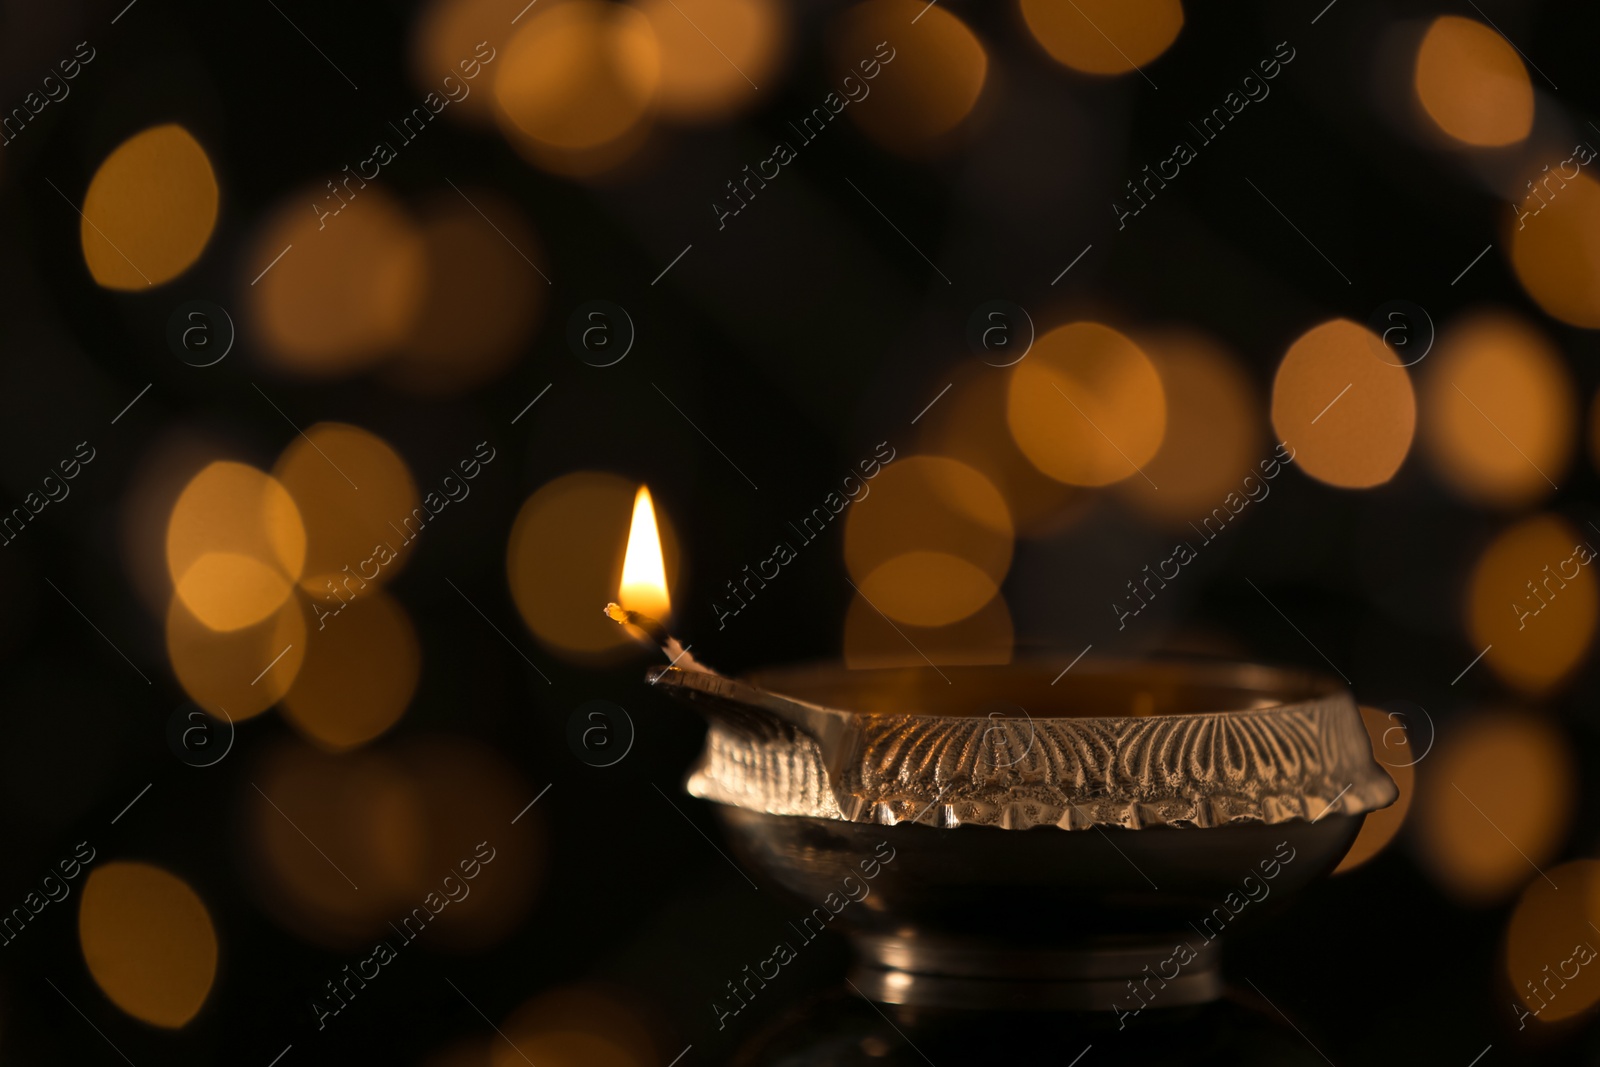 Photo of Diwali diya or clay lamp against blurred lights